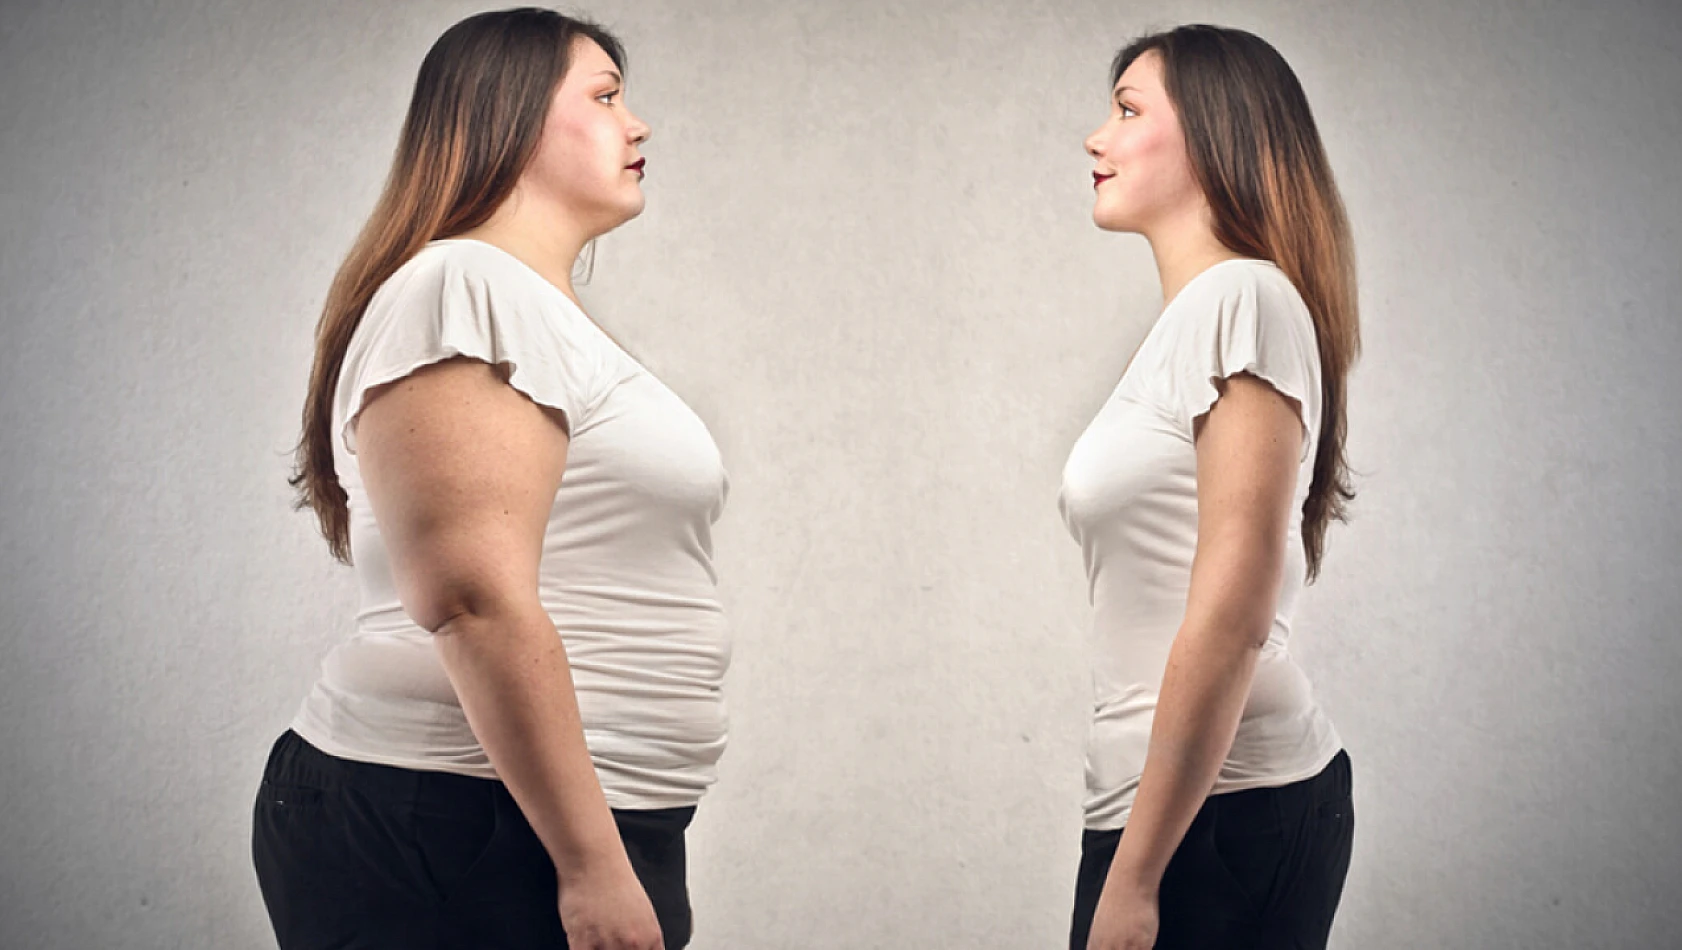 OBEZİTE NEDİR? Obezite neden olur? Obezite tedavisi var mıdır?